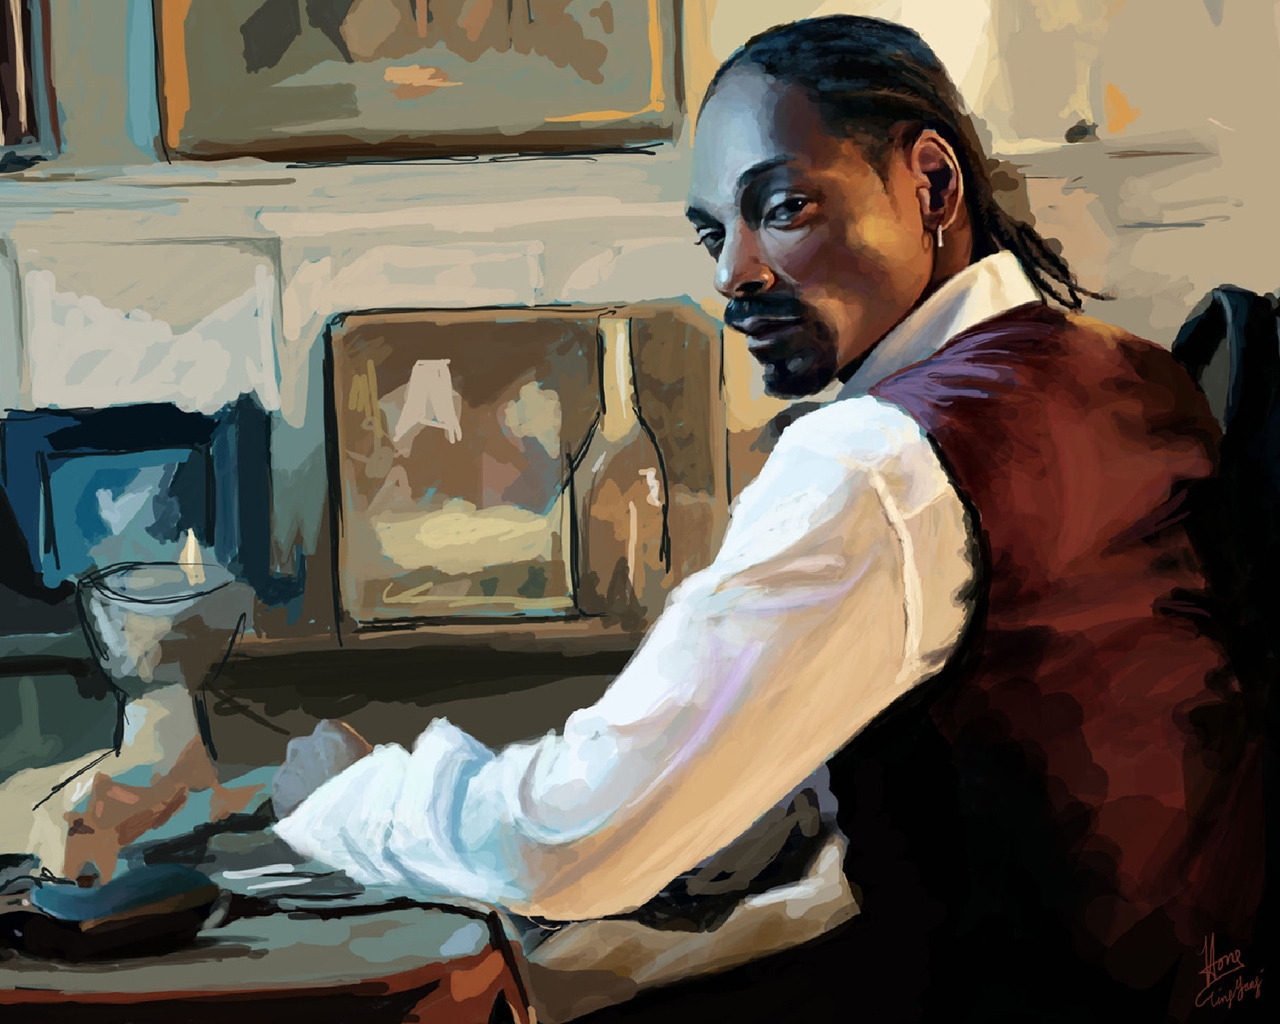 Snoop Dogg Artwork for 1280 x 1024 resolution